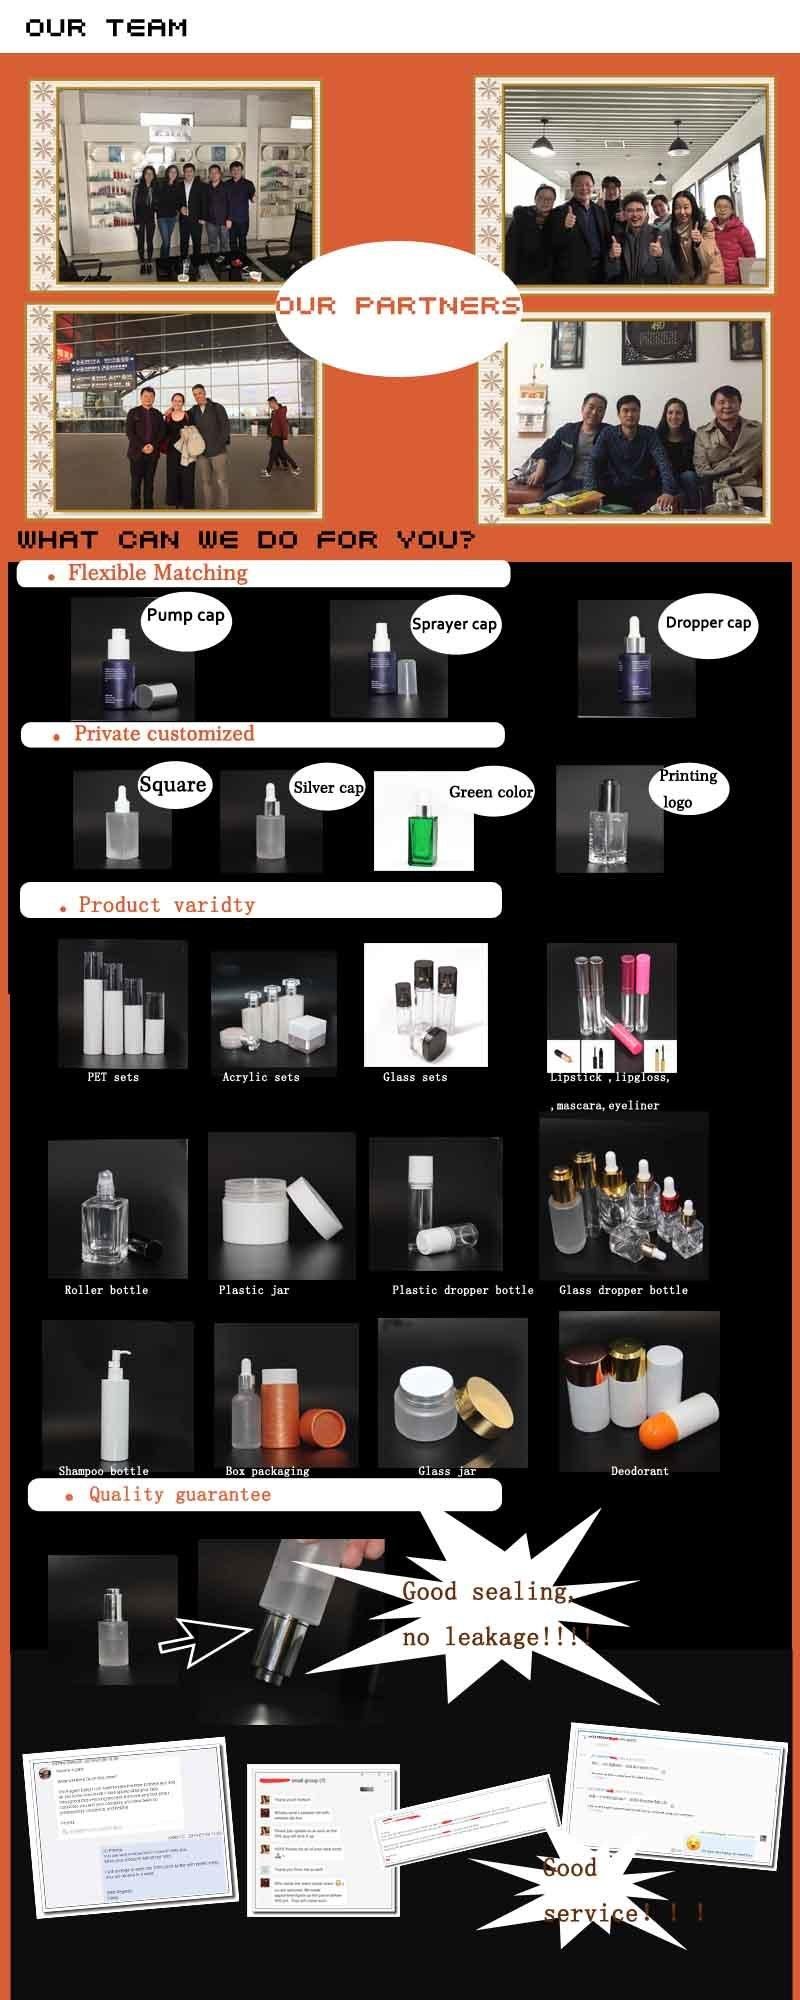 100ml 120ml Transparent Clear Square Perfume Bottle with Screw Crimp Pump Sprayer Makeup Spray Bottle